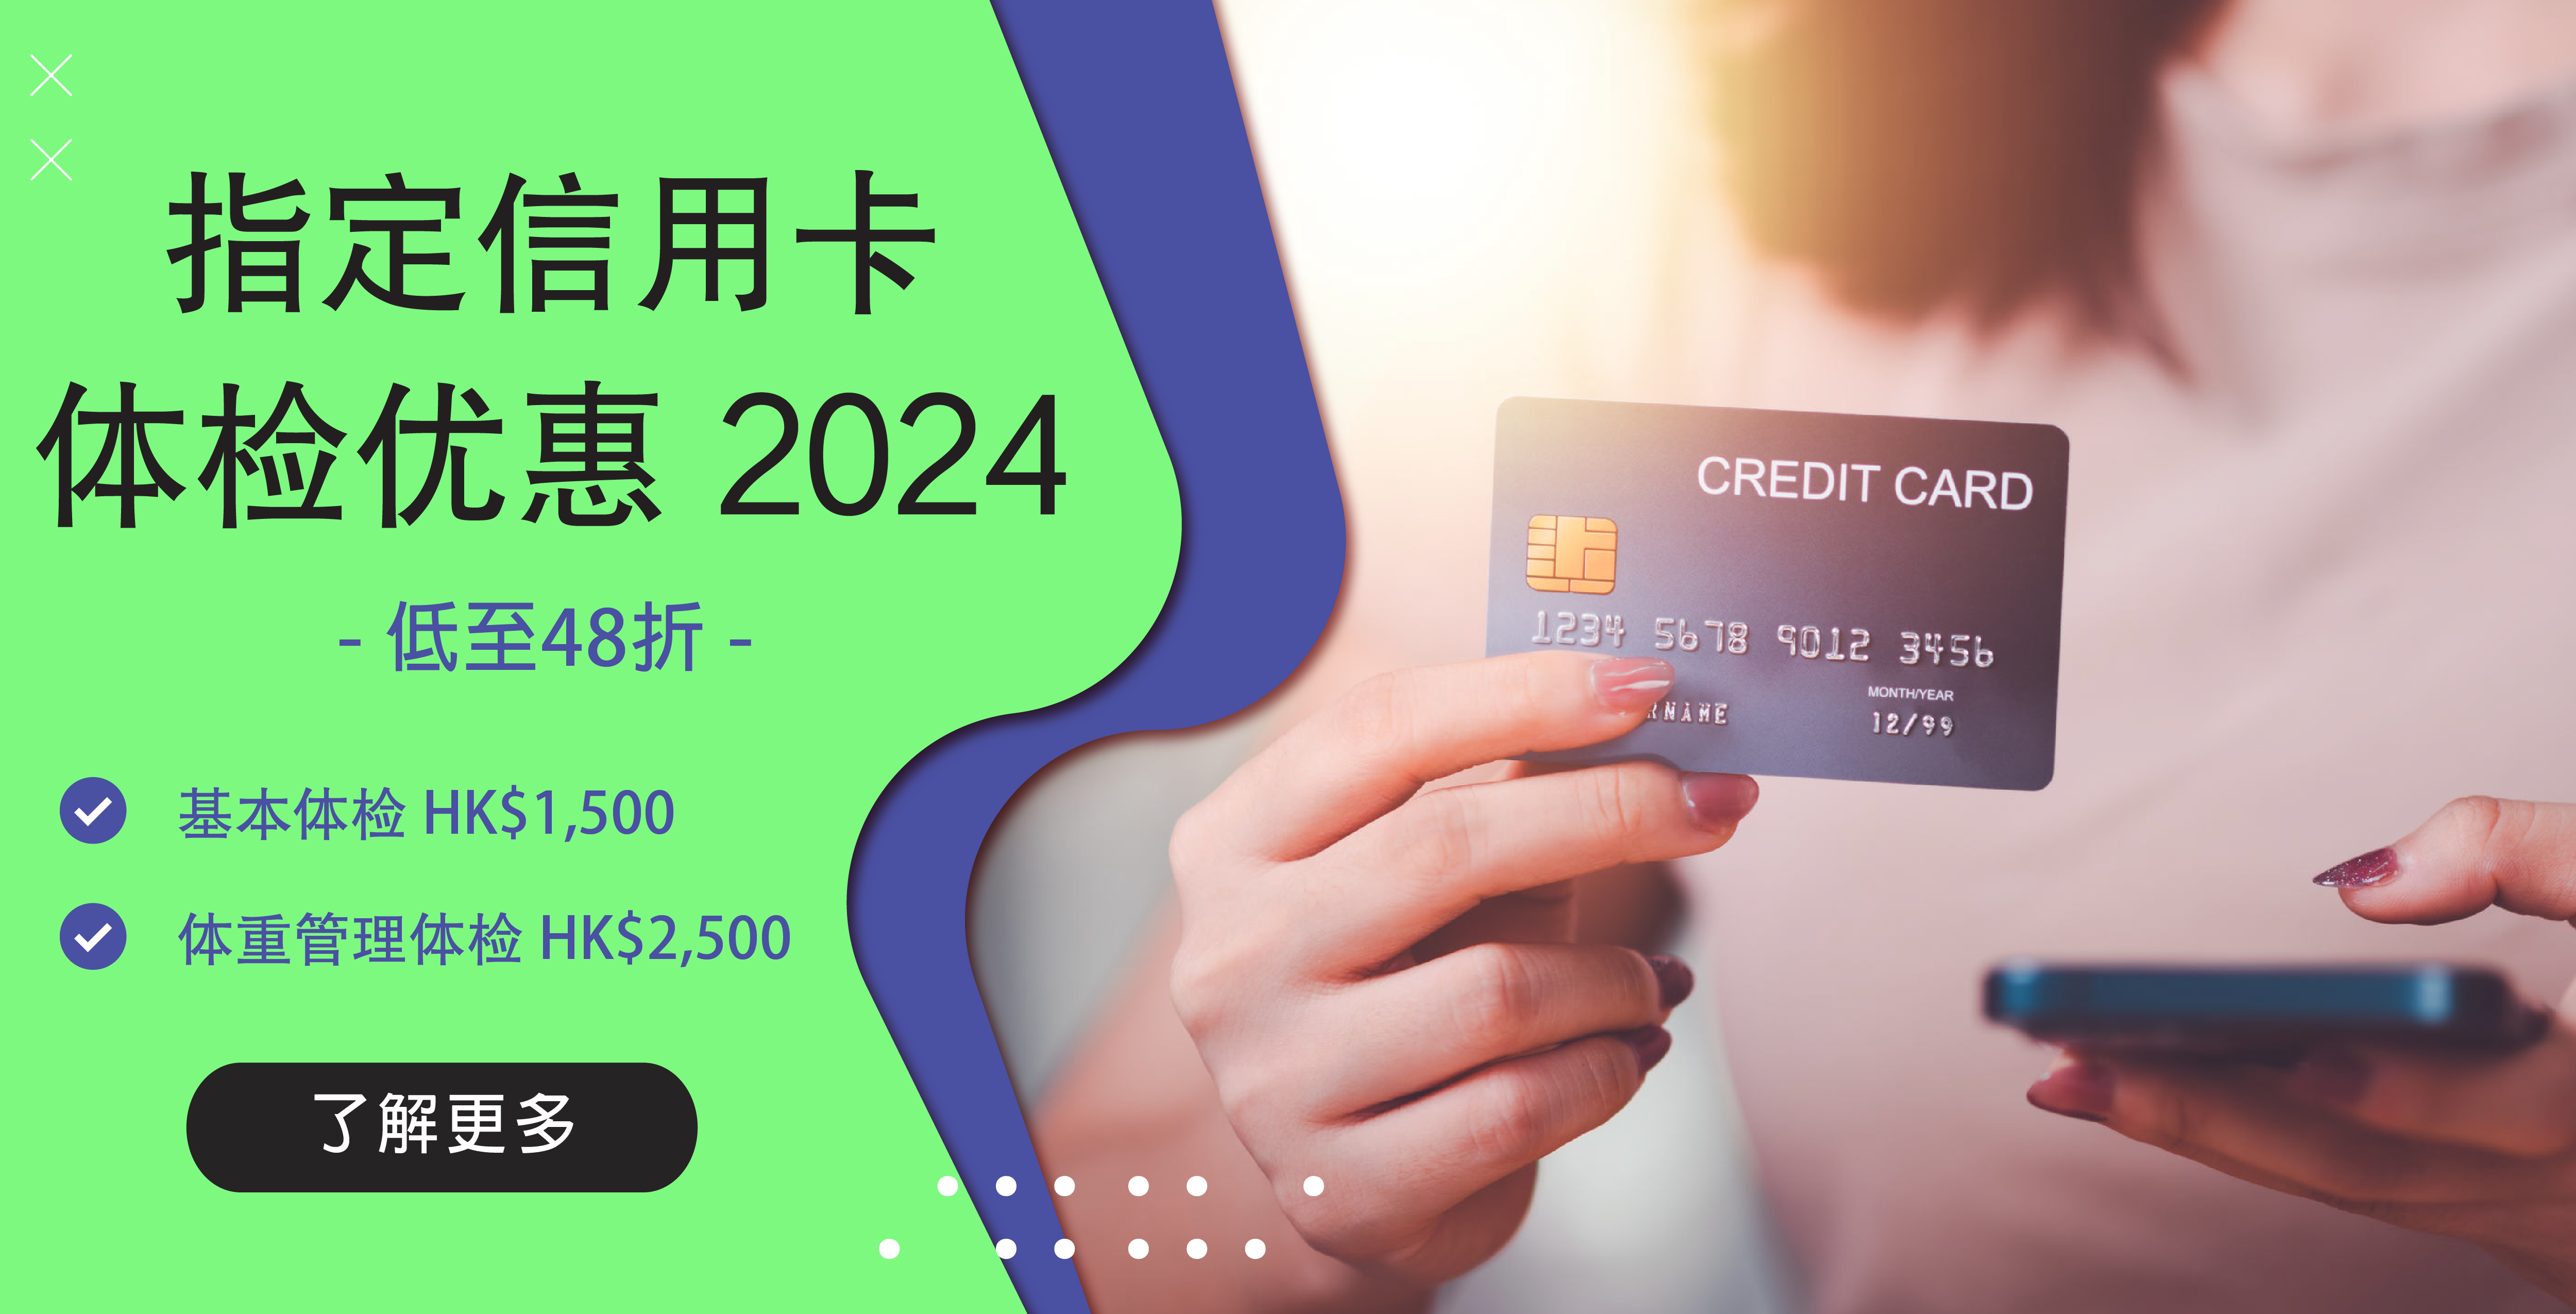 Credit Card offer 2024